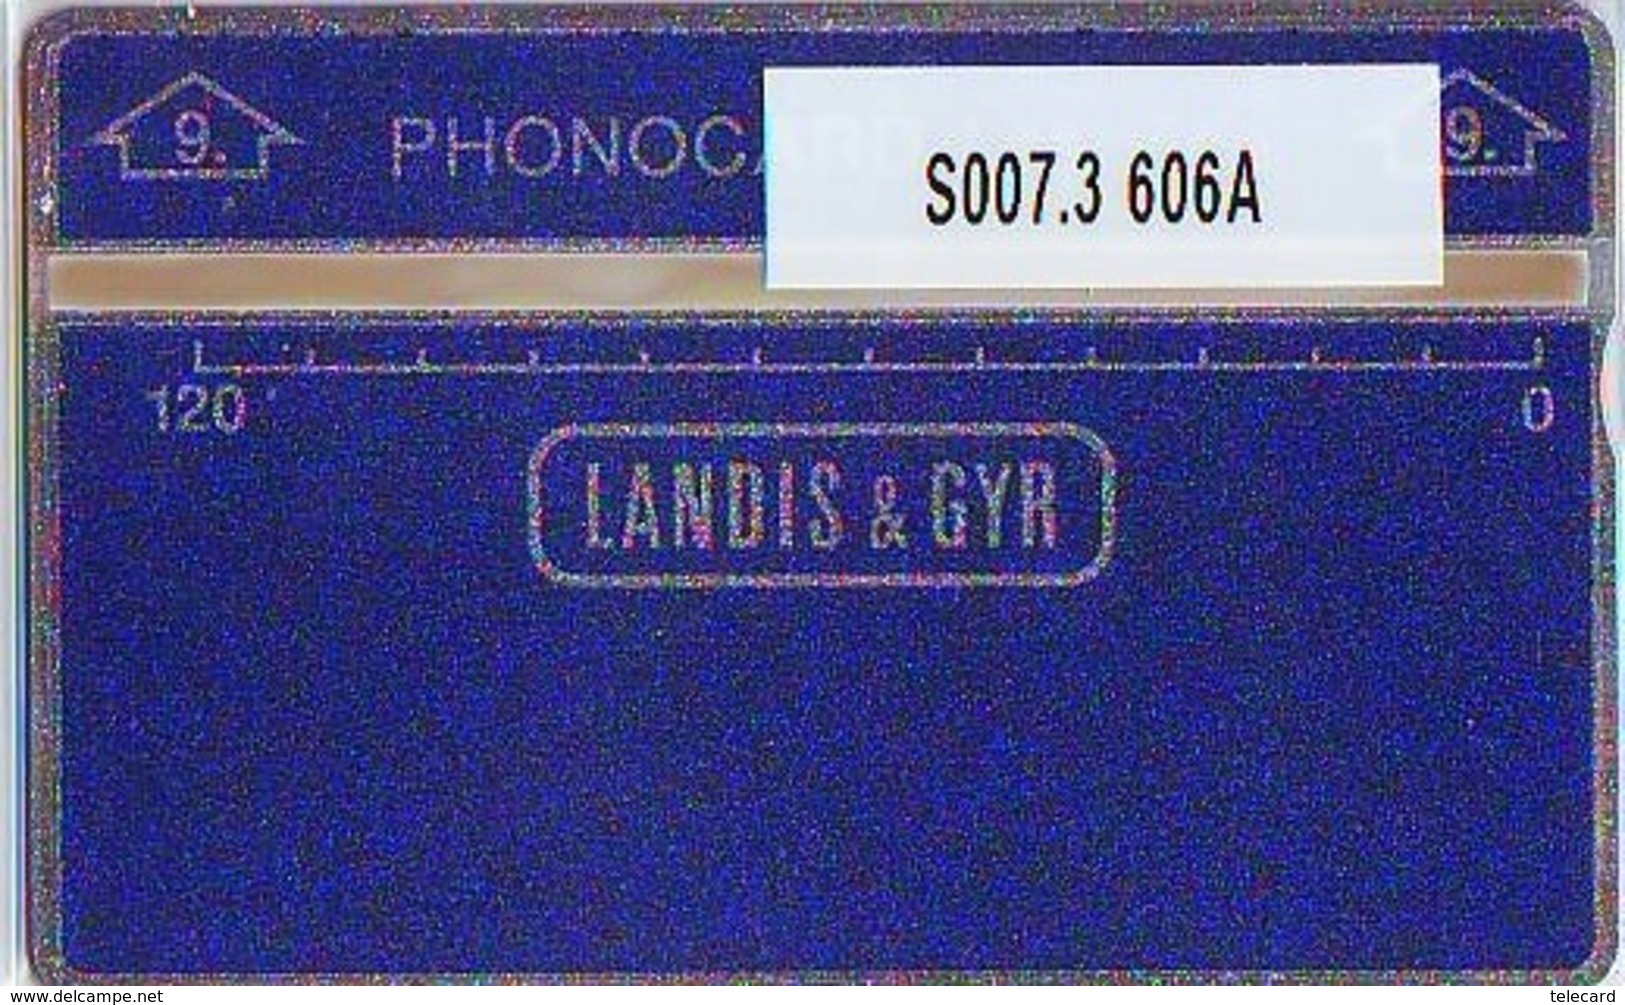 NEDERLAND LANDIS&GYR * SODECO * SERVICE CARD NR S007.3  606A  "9" ONGEBRUIKT *  MINT - Test & Service